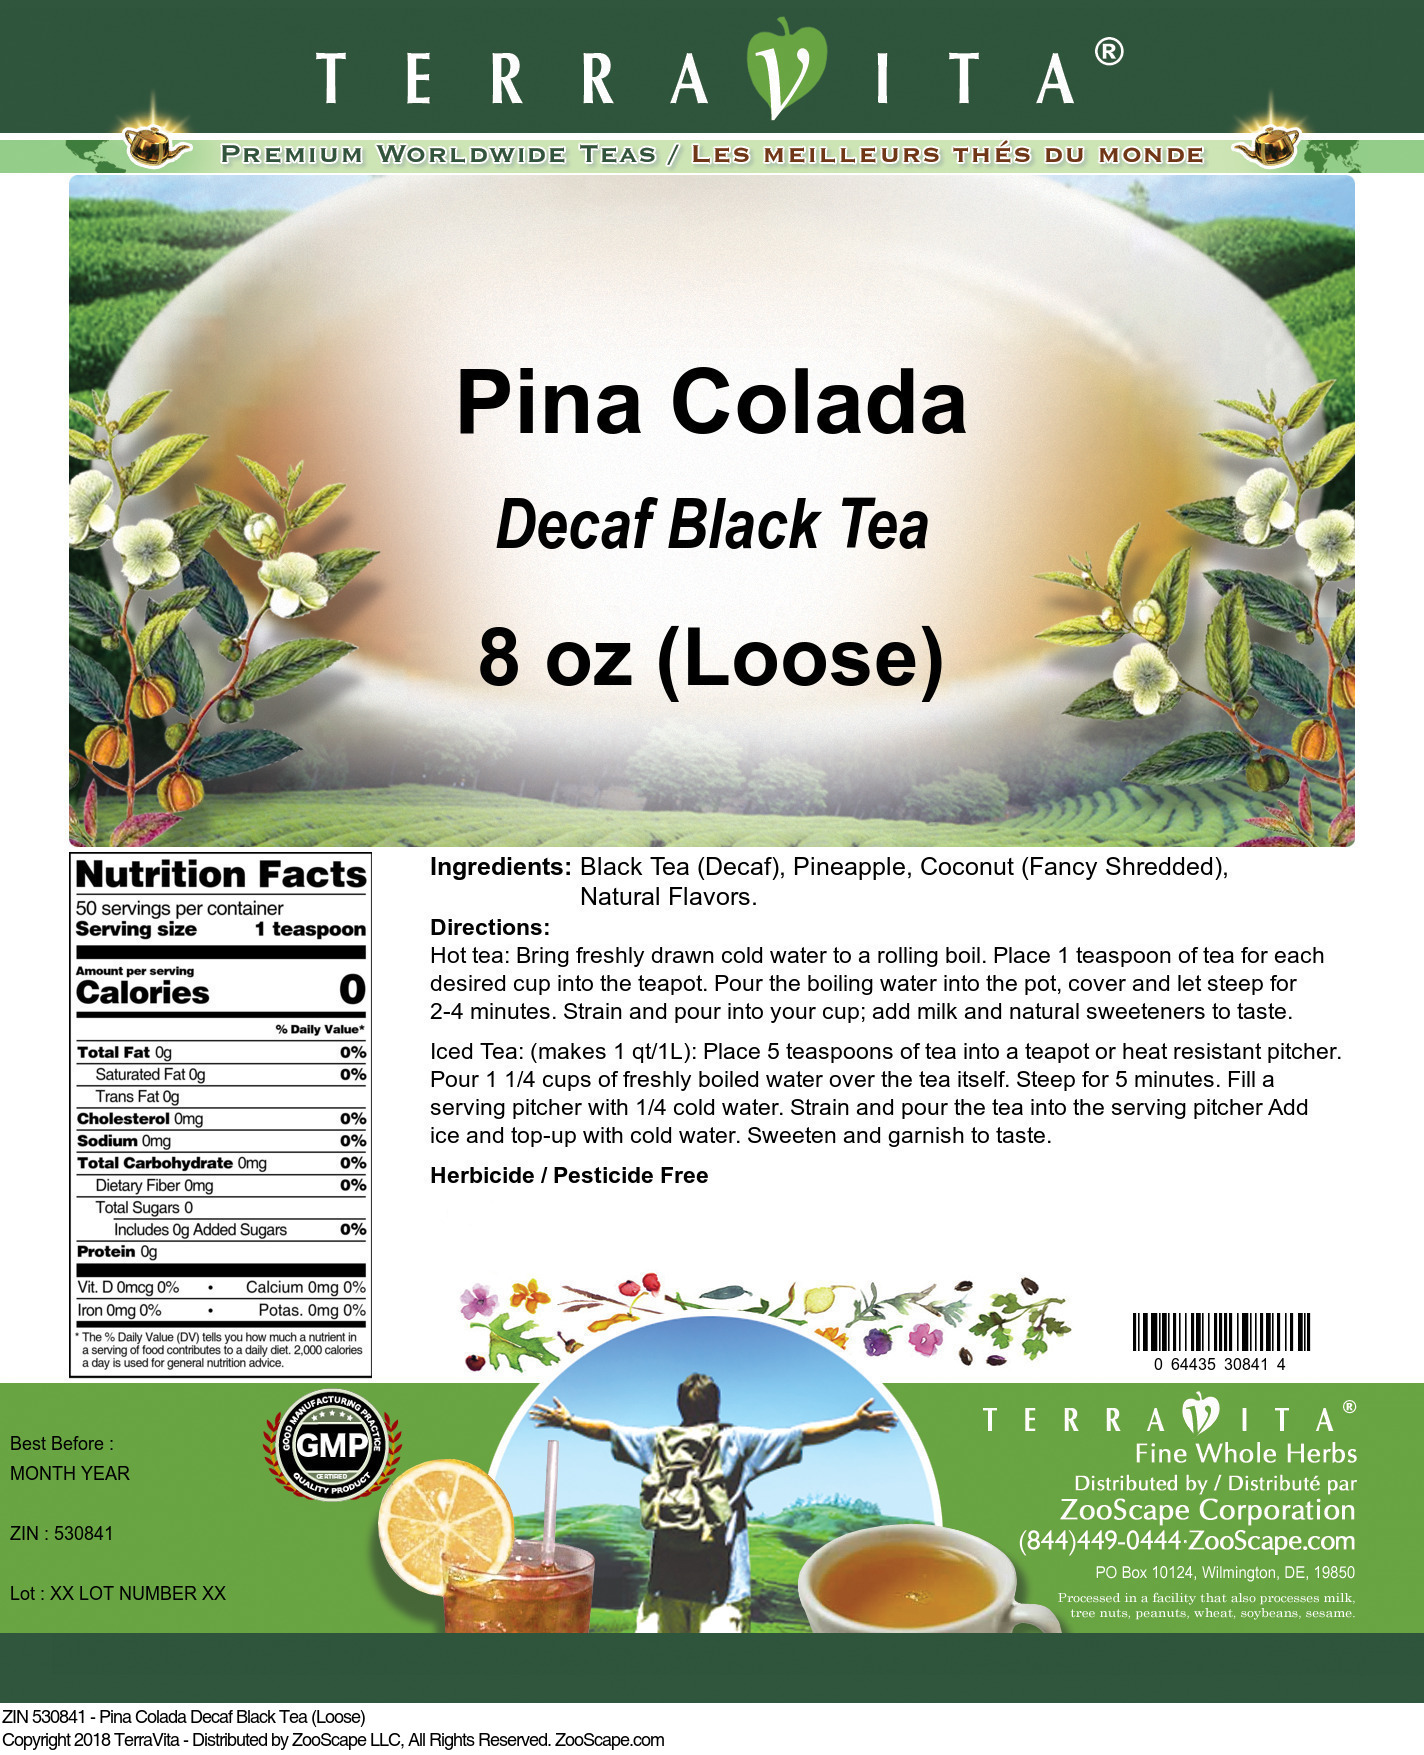 Pina Colada Decaf Black Tea (Loose) - Label